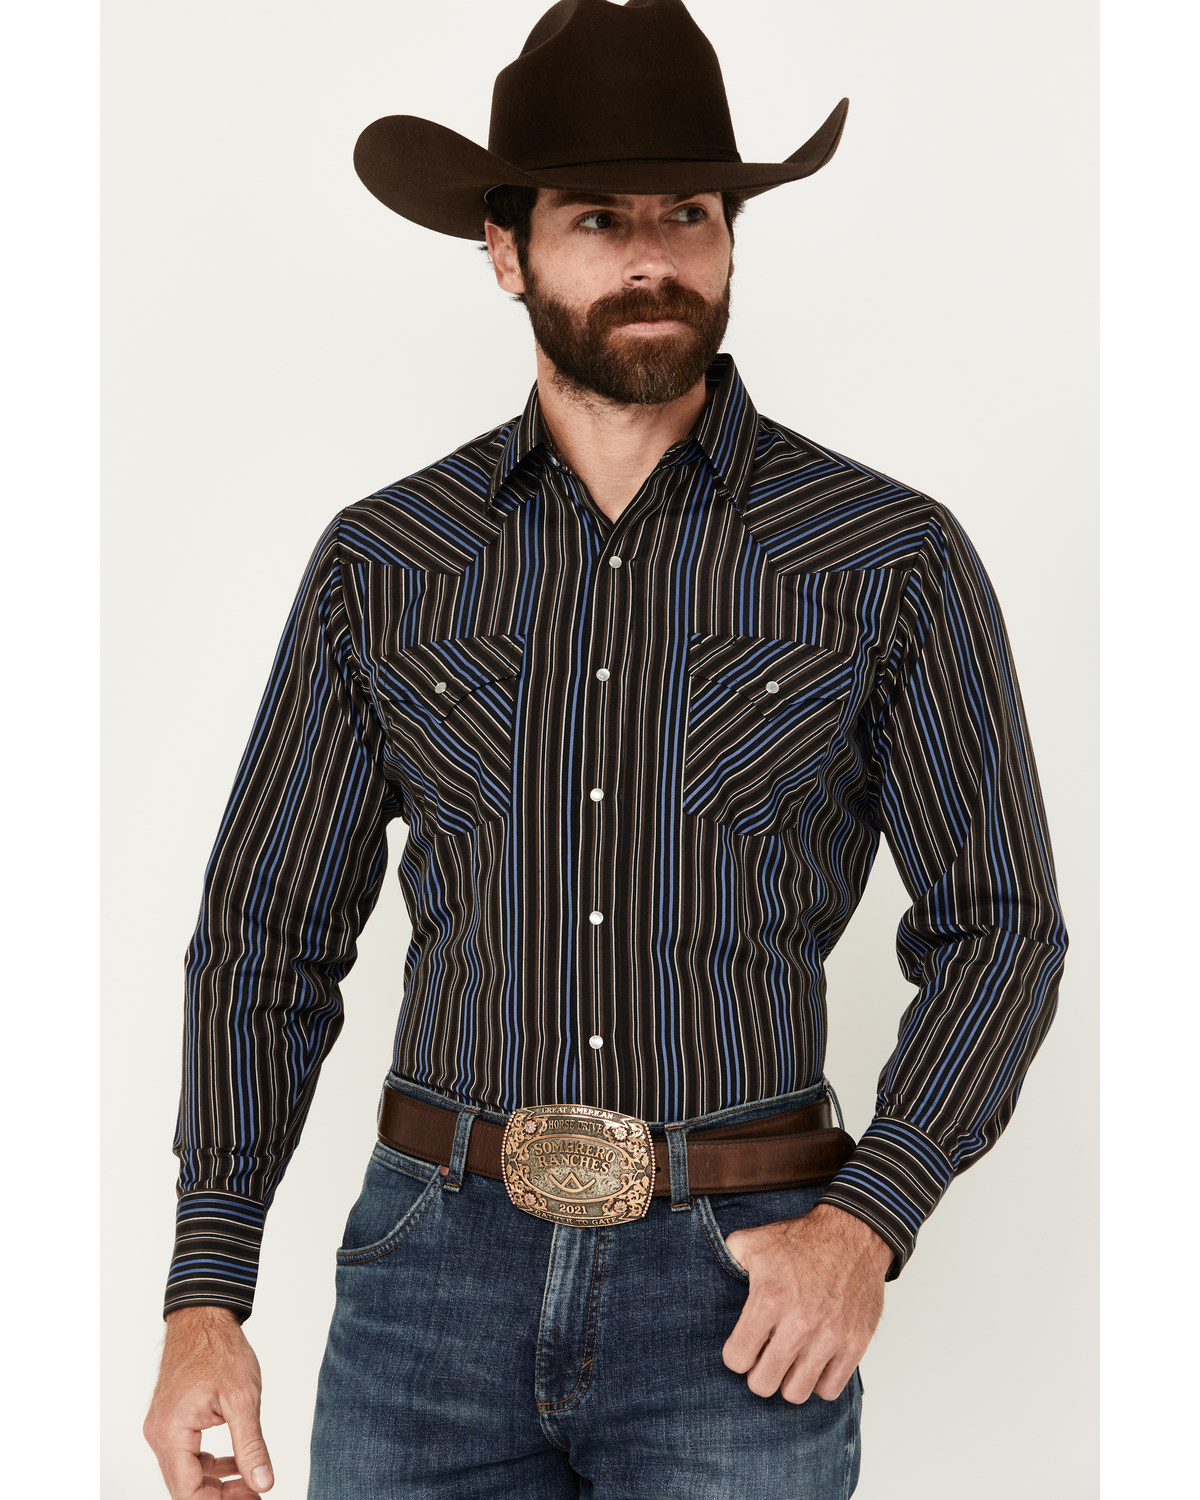 Ely Walker Men's Striped Print Long Sleeve Pearl Snap Western Shirt